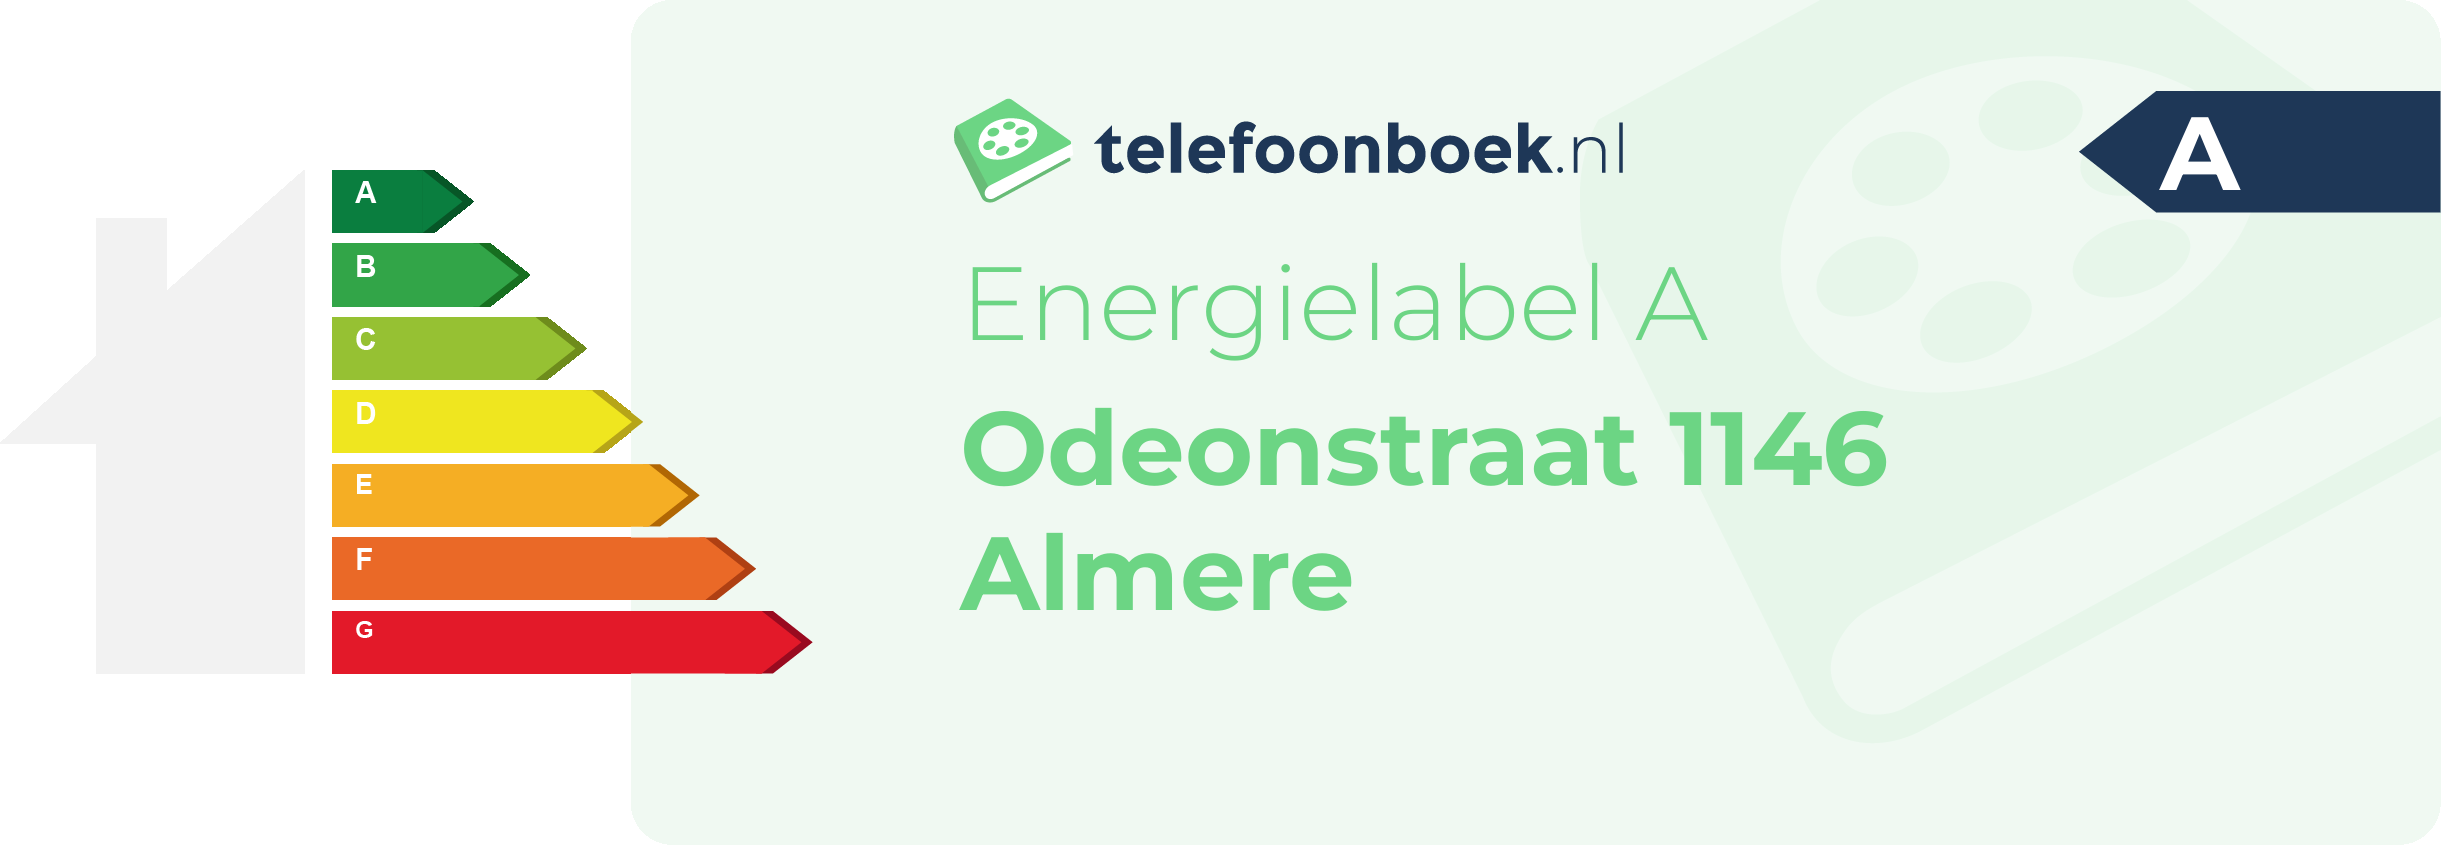 Energielabel Odeonstraat 1146 Almere